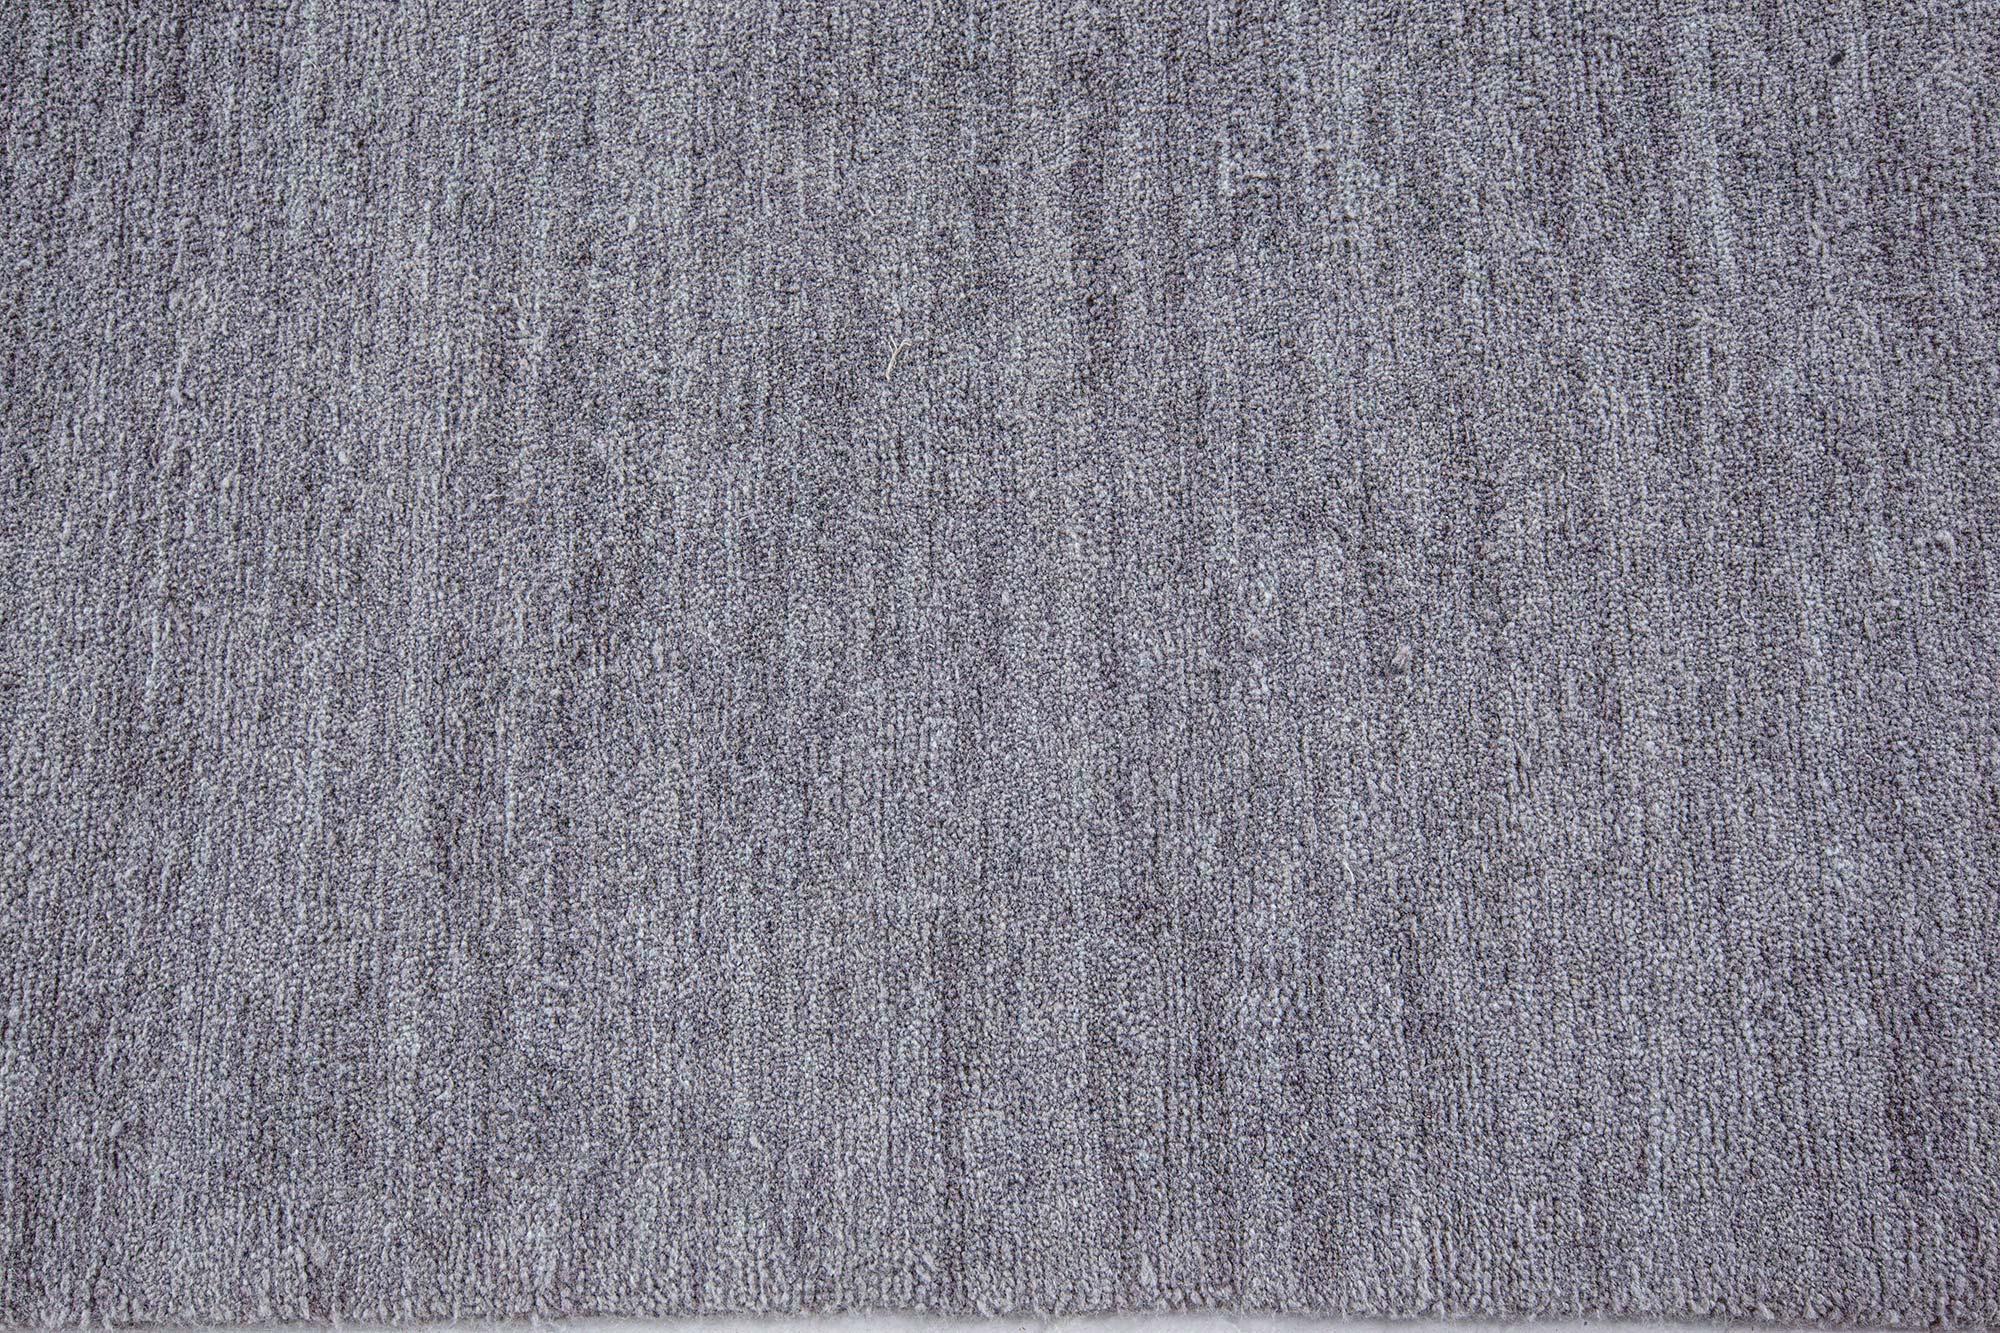 Large contemporary dove-grey area rug by Doris Leslie Blau
Size: 15'2